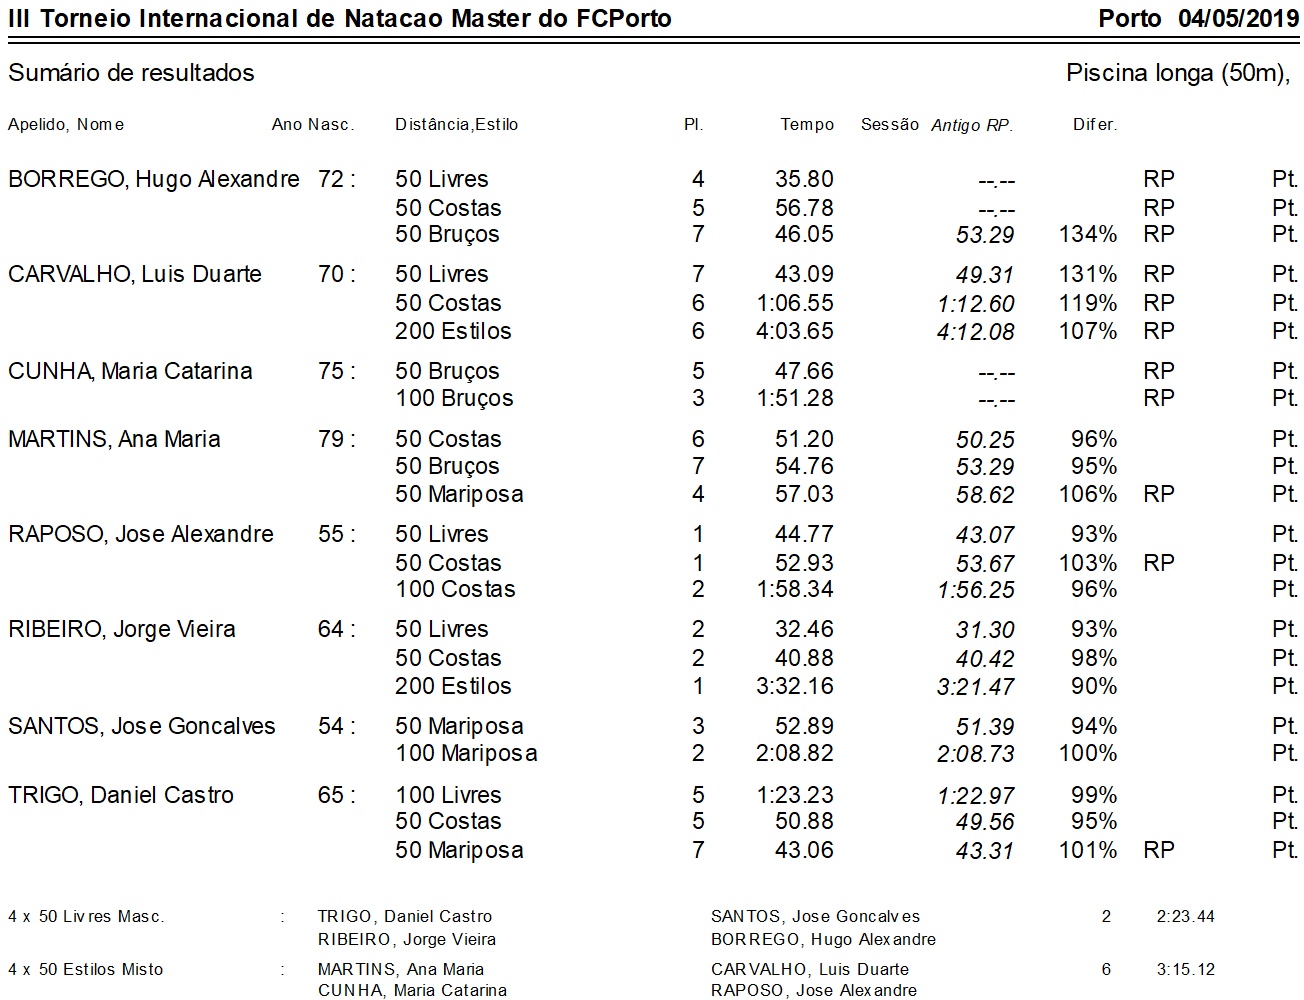 SCA_Results_Porto_provisorio.jpg